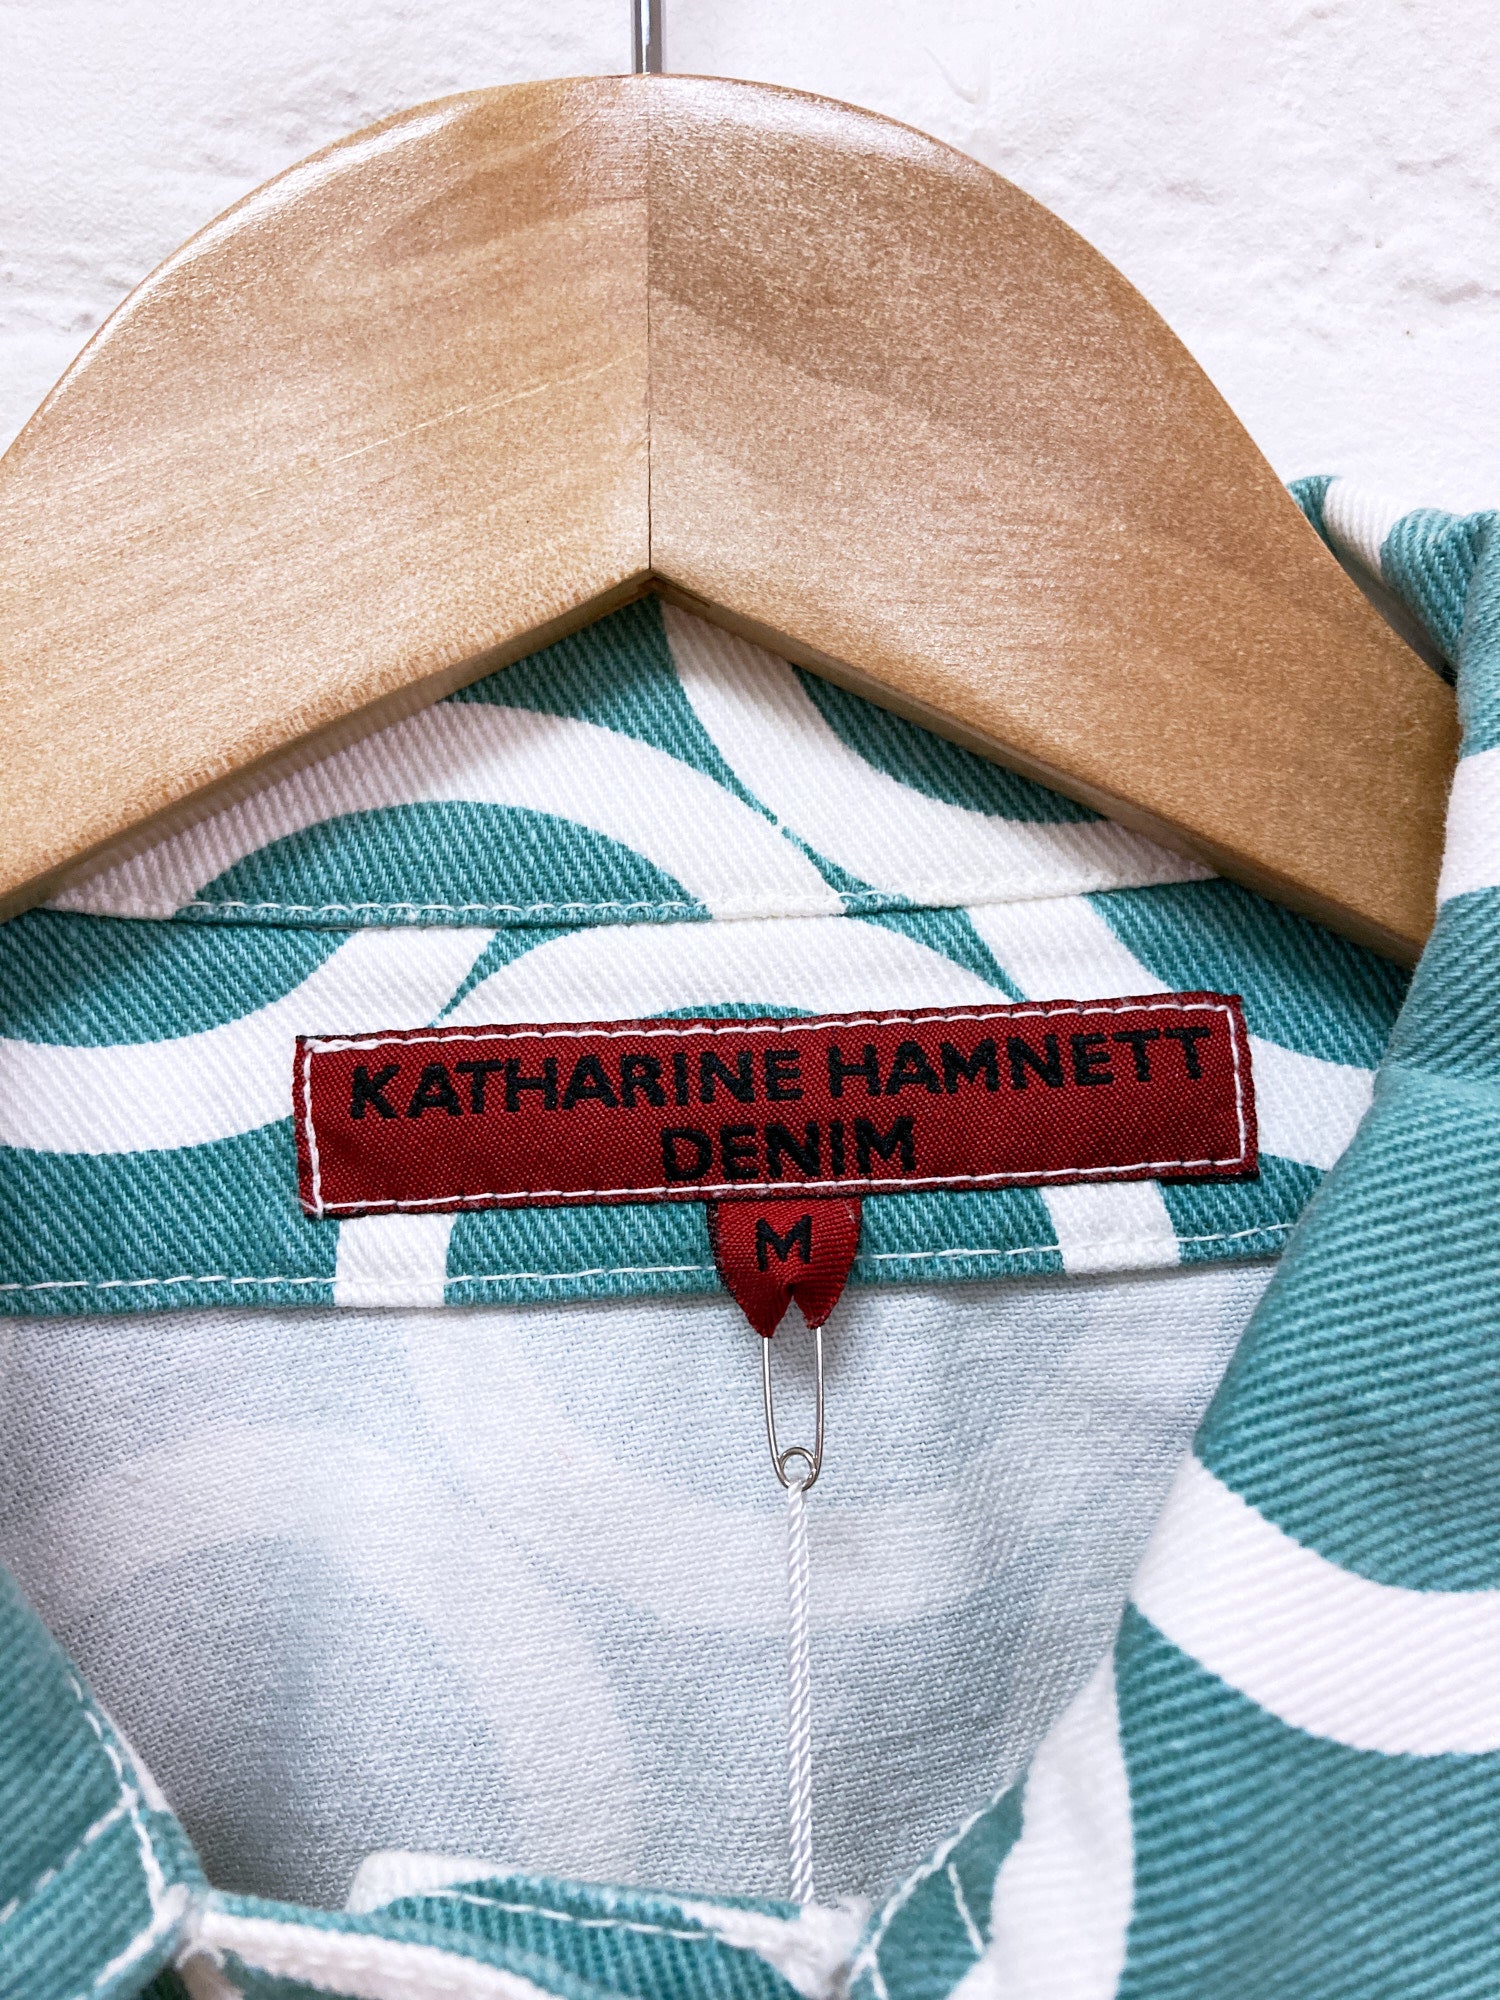 Katharine Hamnett Denim 1990s circle print denim jacket and jeans suit - S M